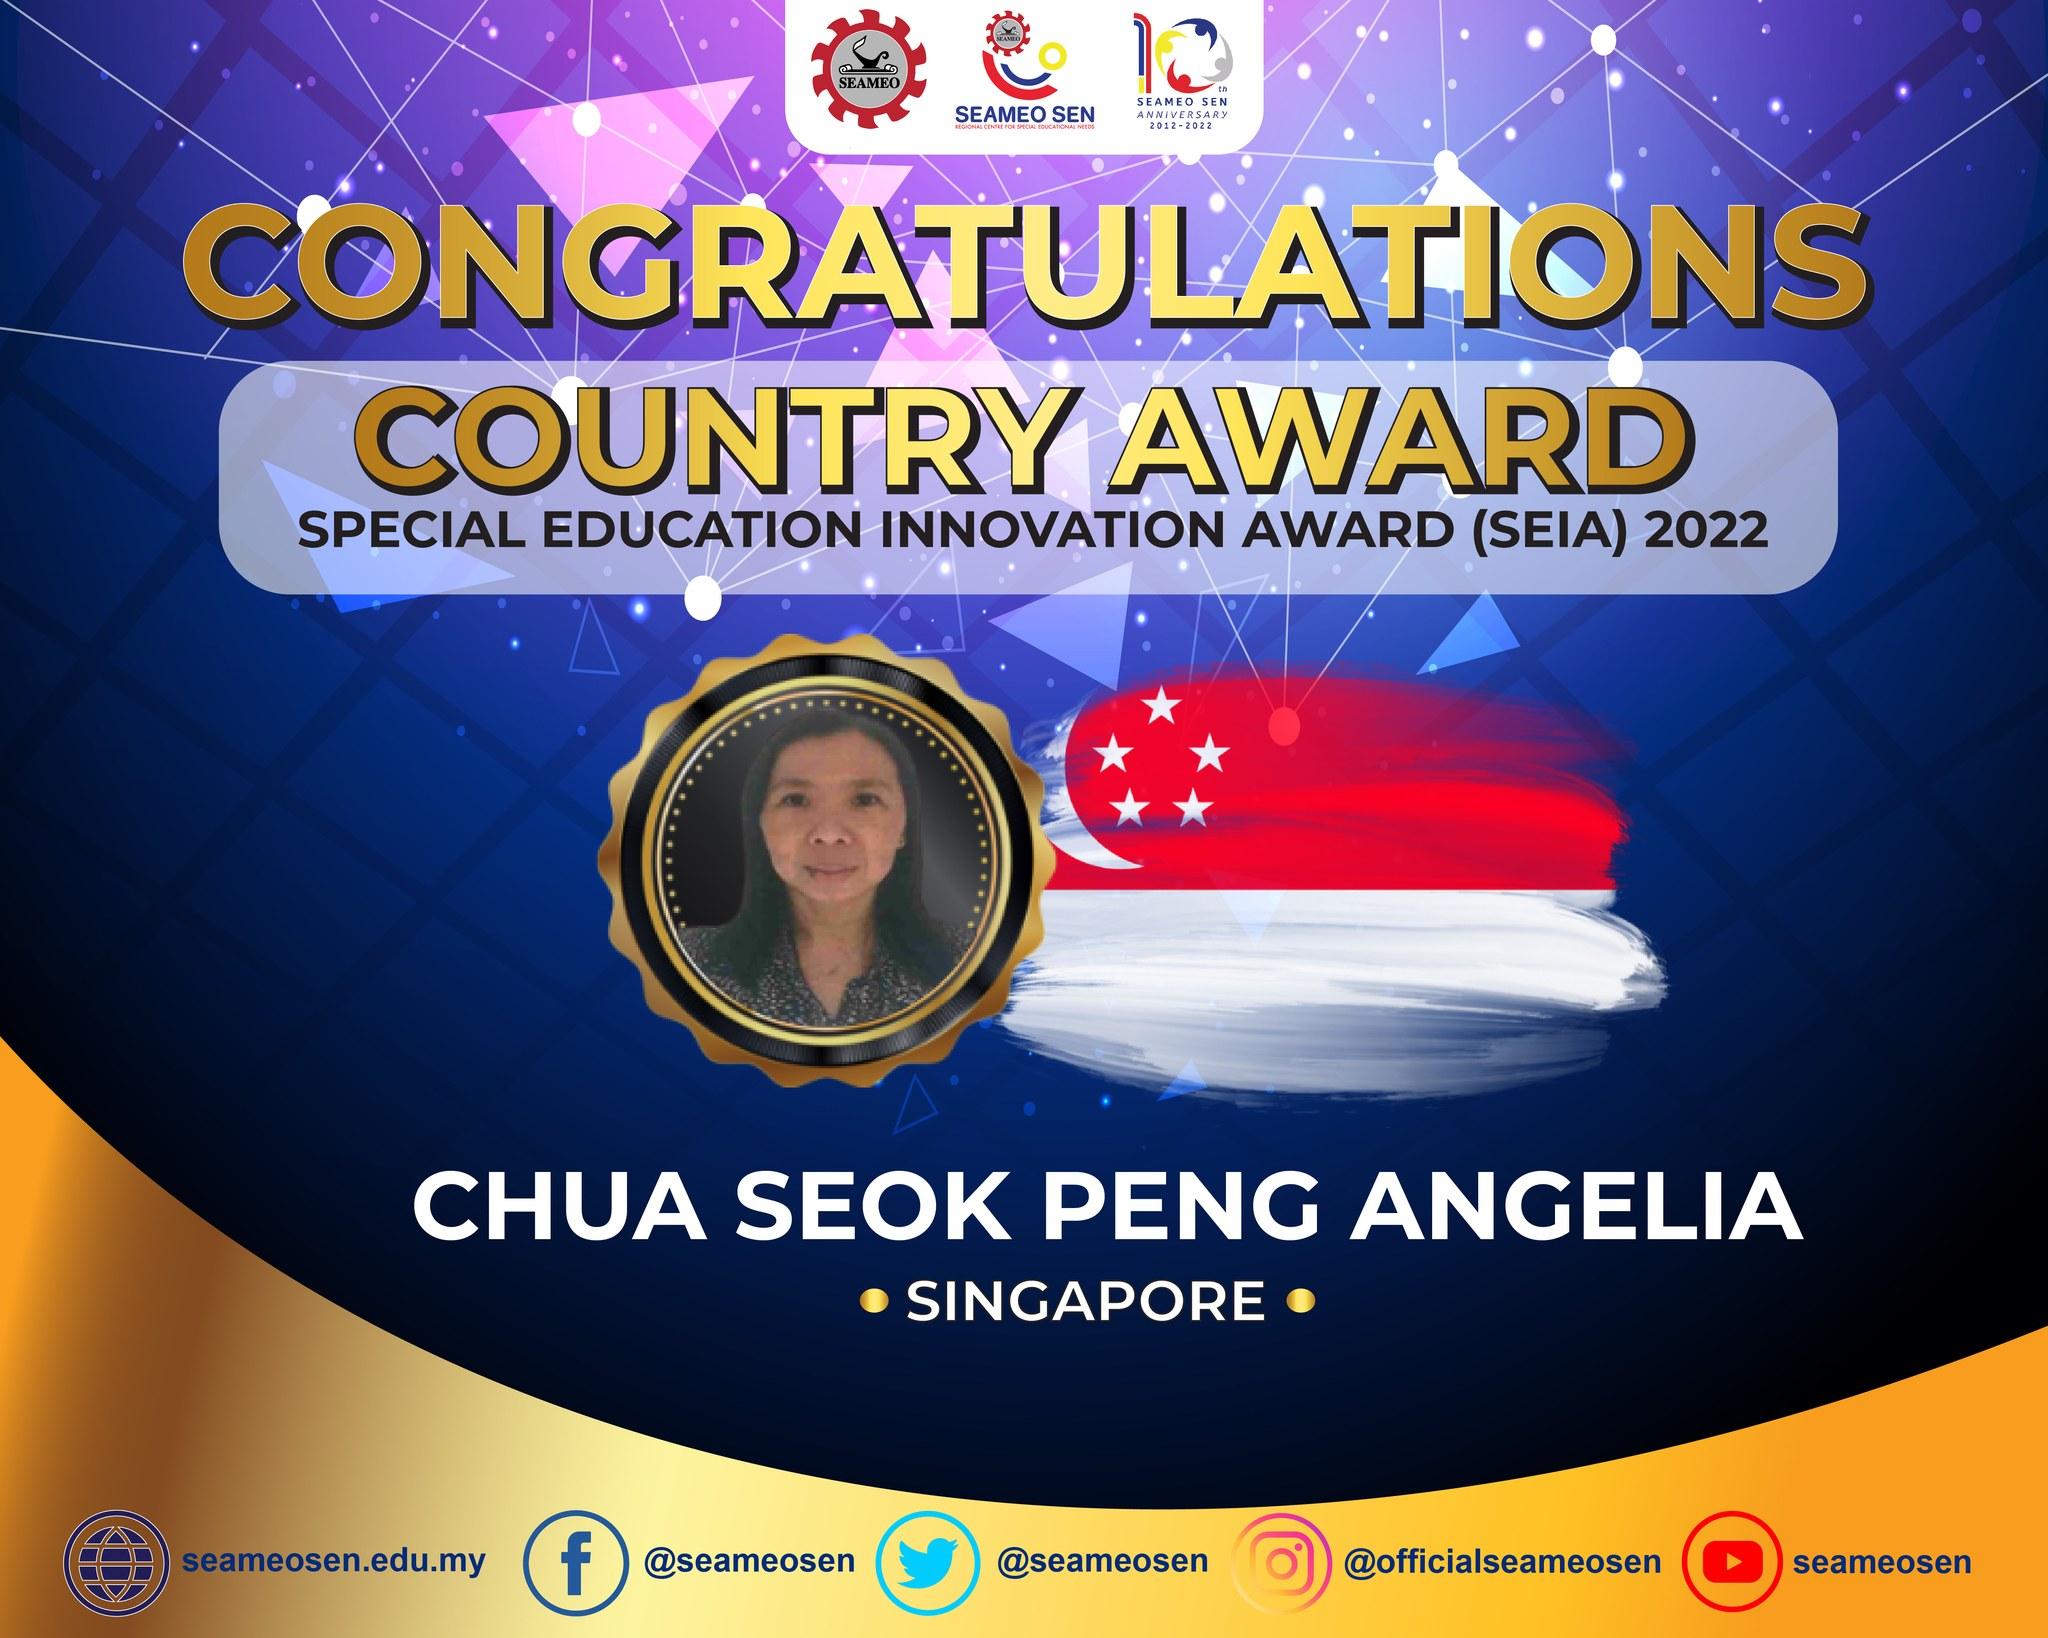 Country Award for Singapore is Mdm. Chua Seok Peng Angelia